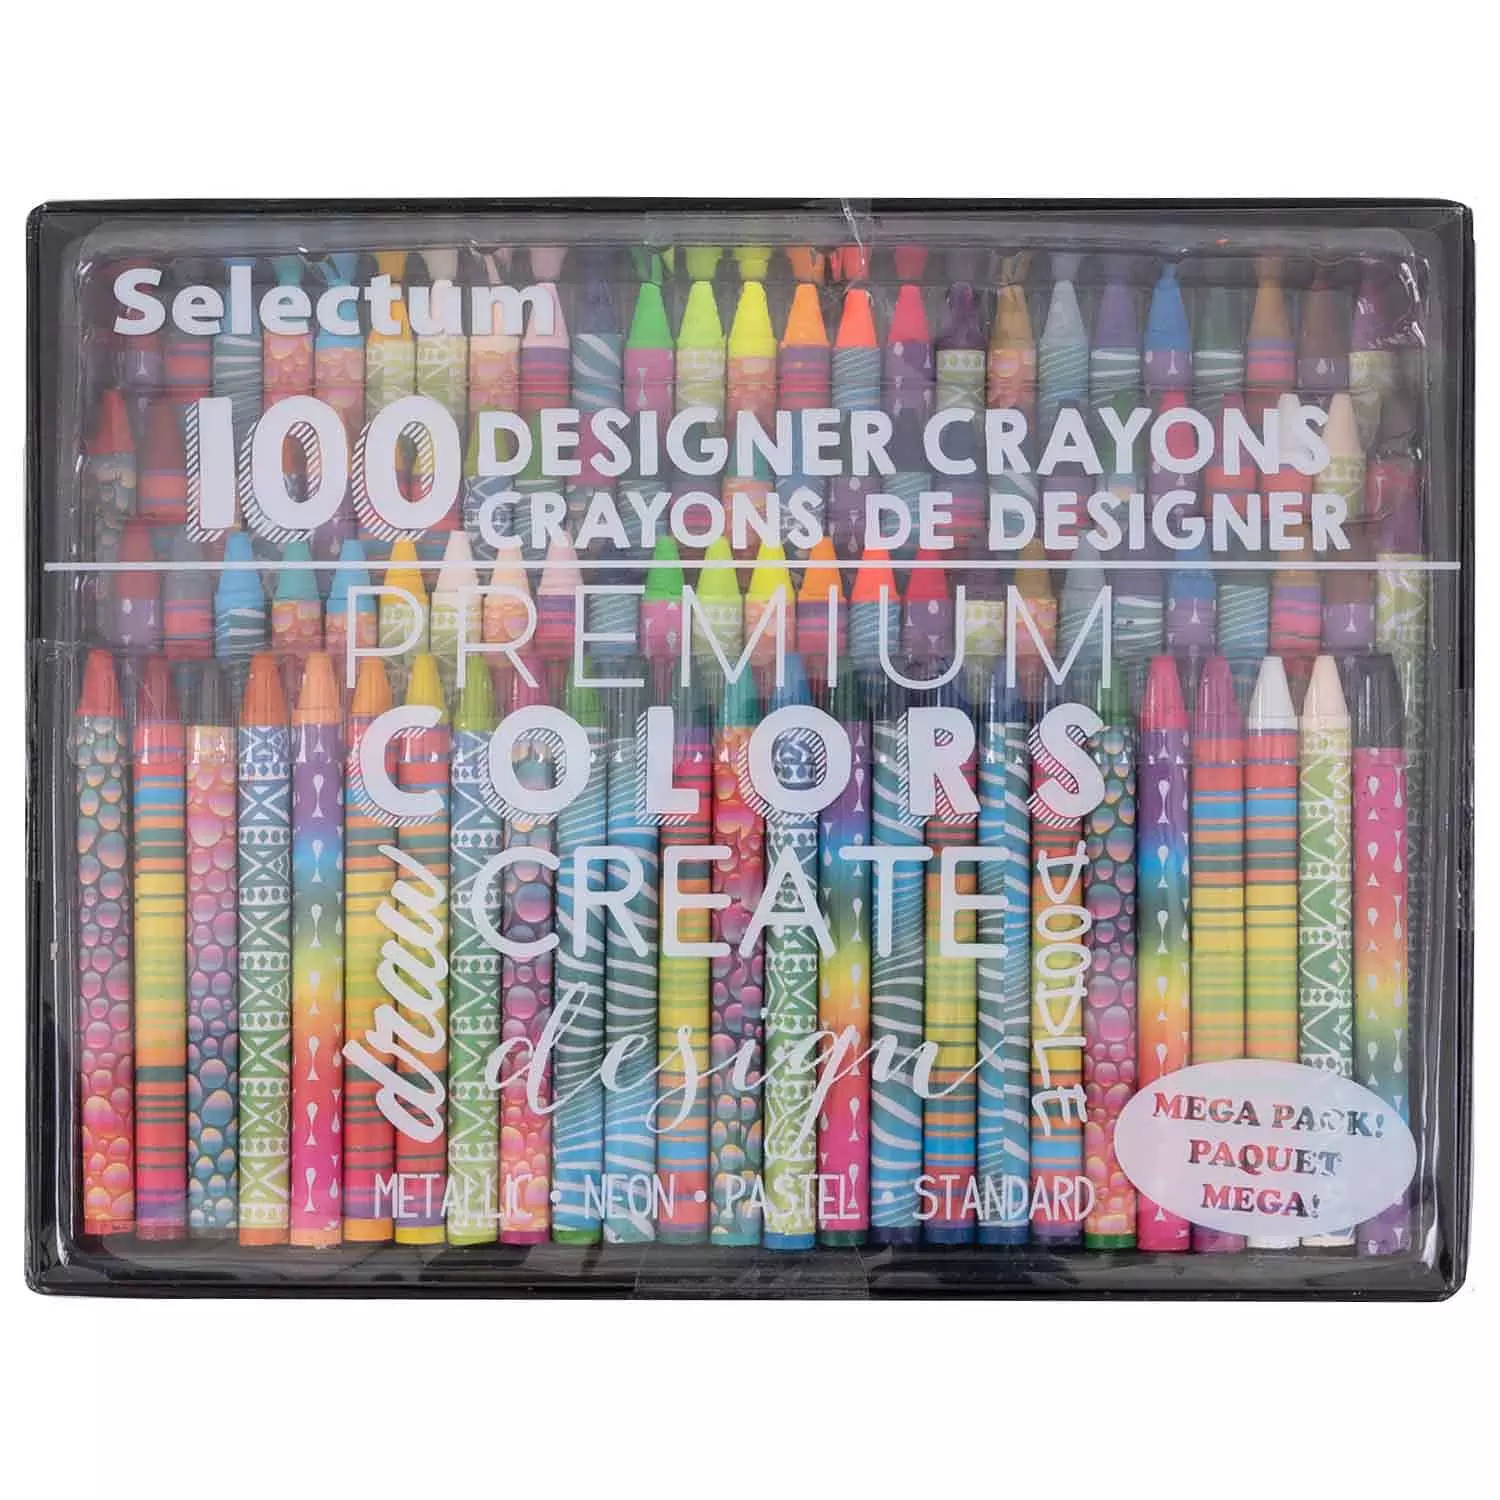 Set of 100 designer wax crayons